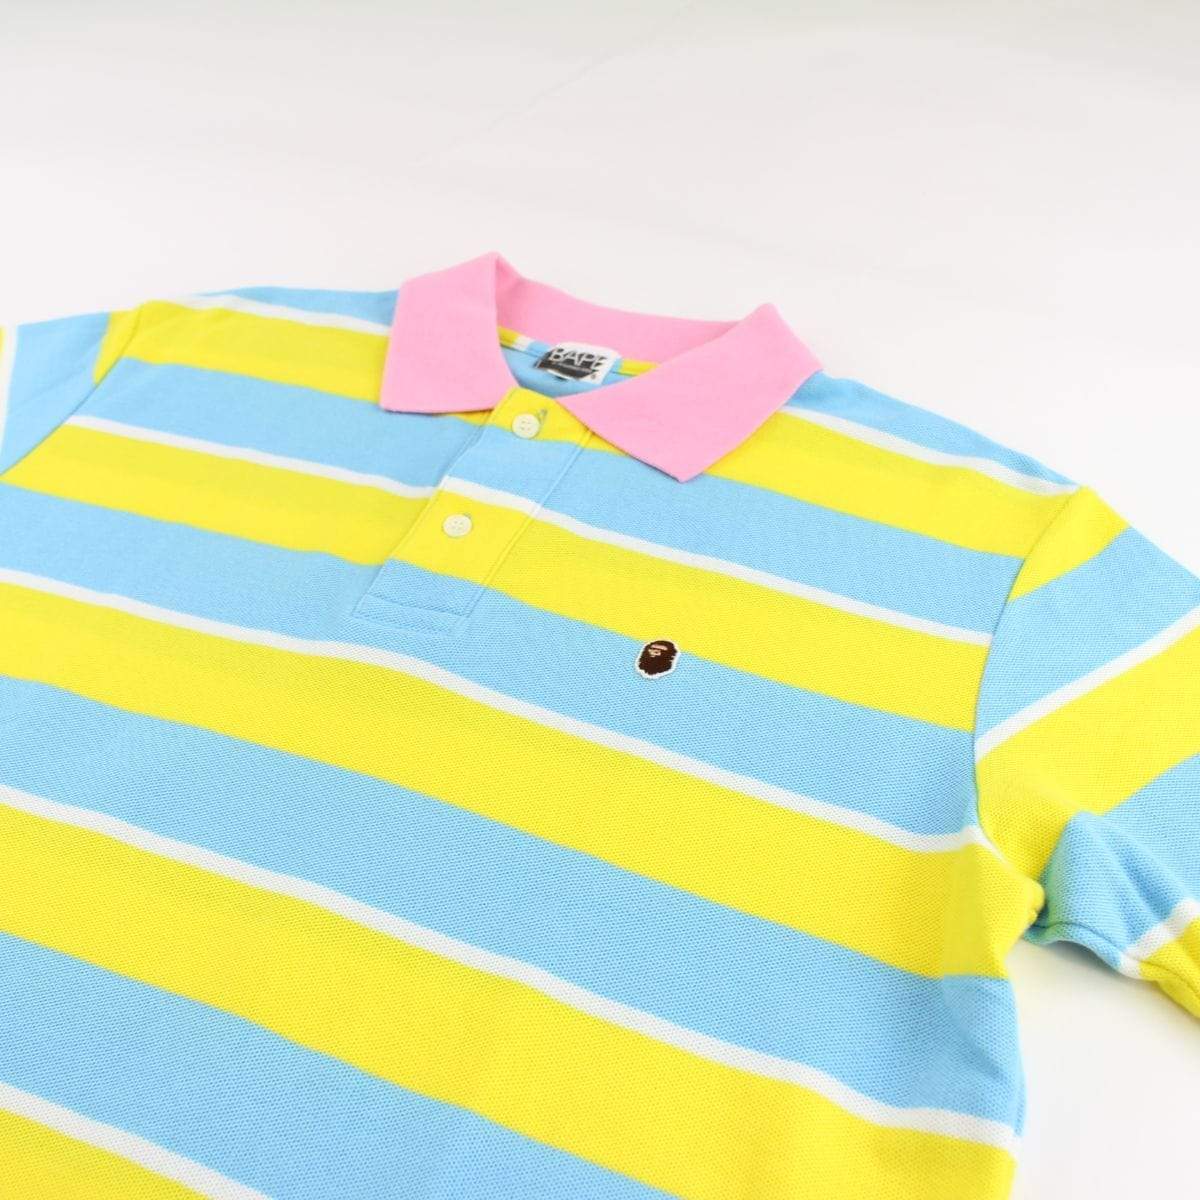 Bape Candy Coloured Polo Shirt - SaruGeneral